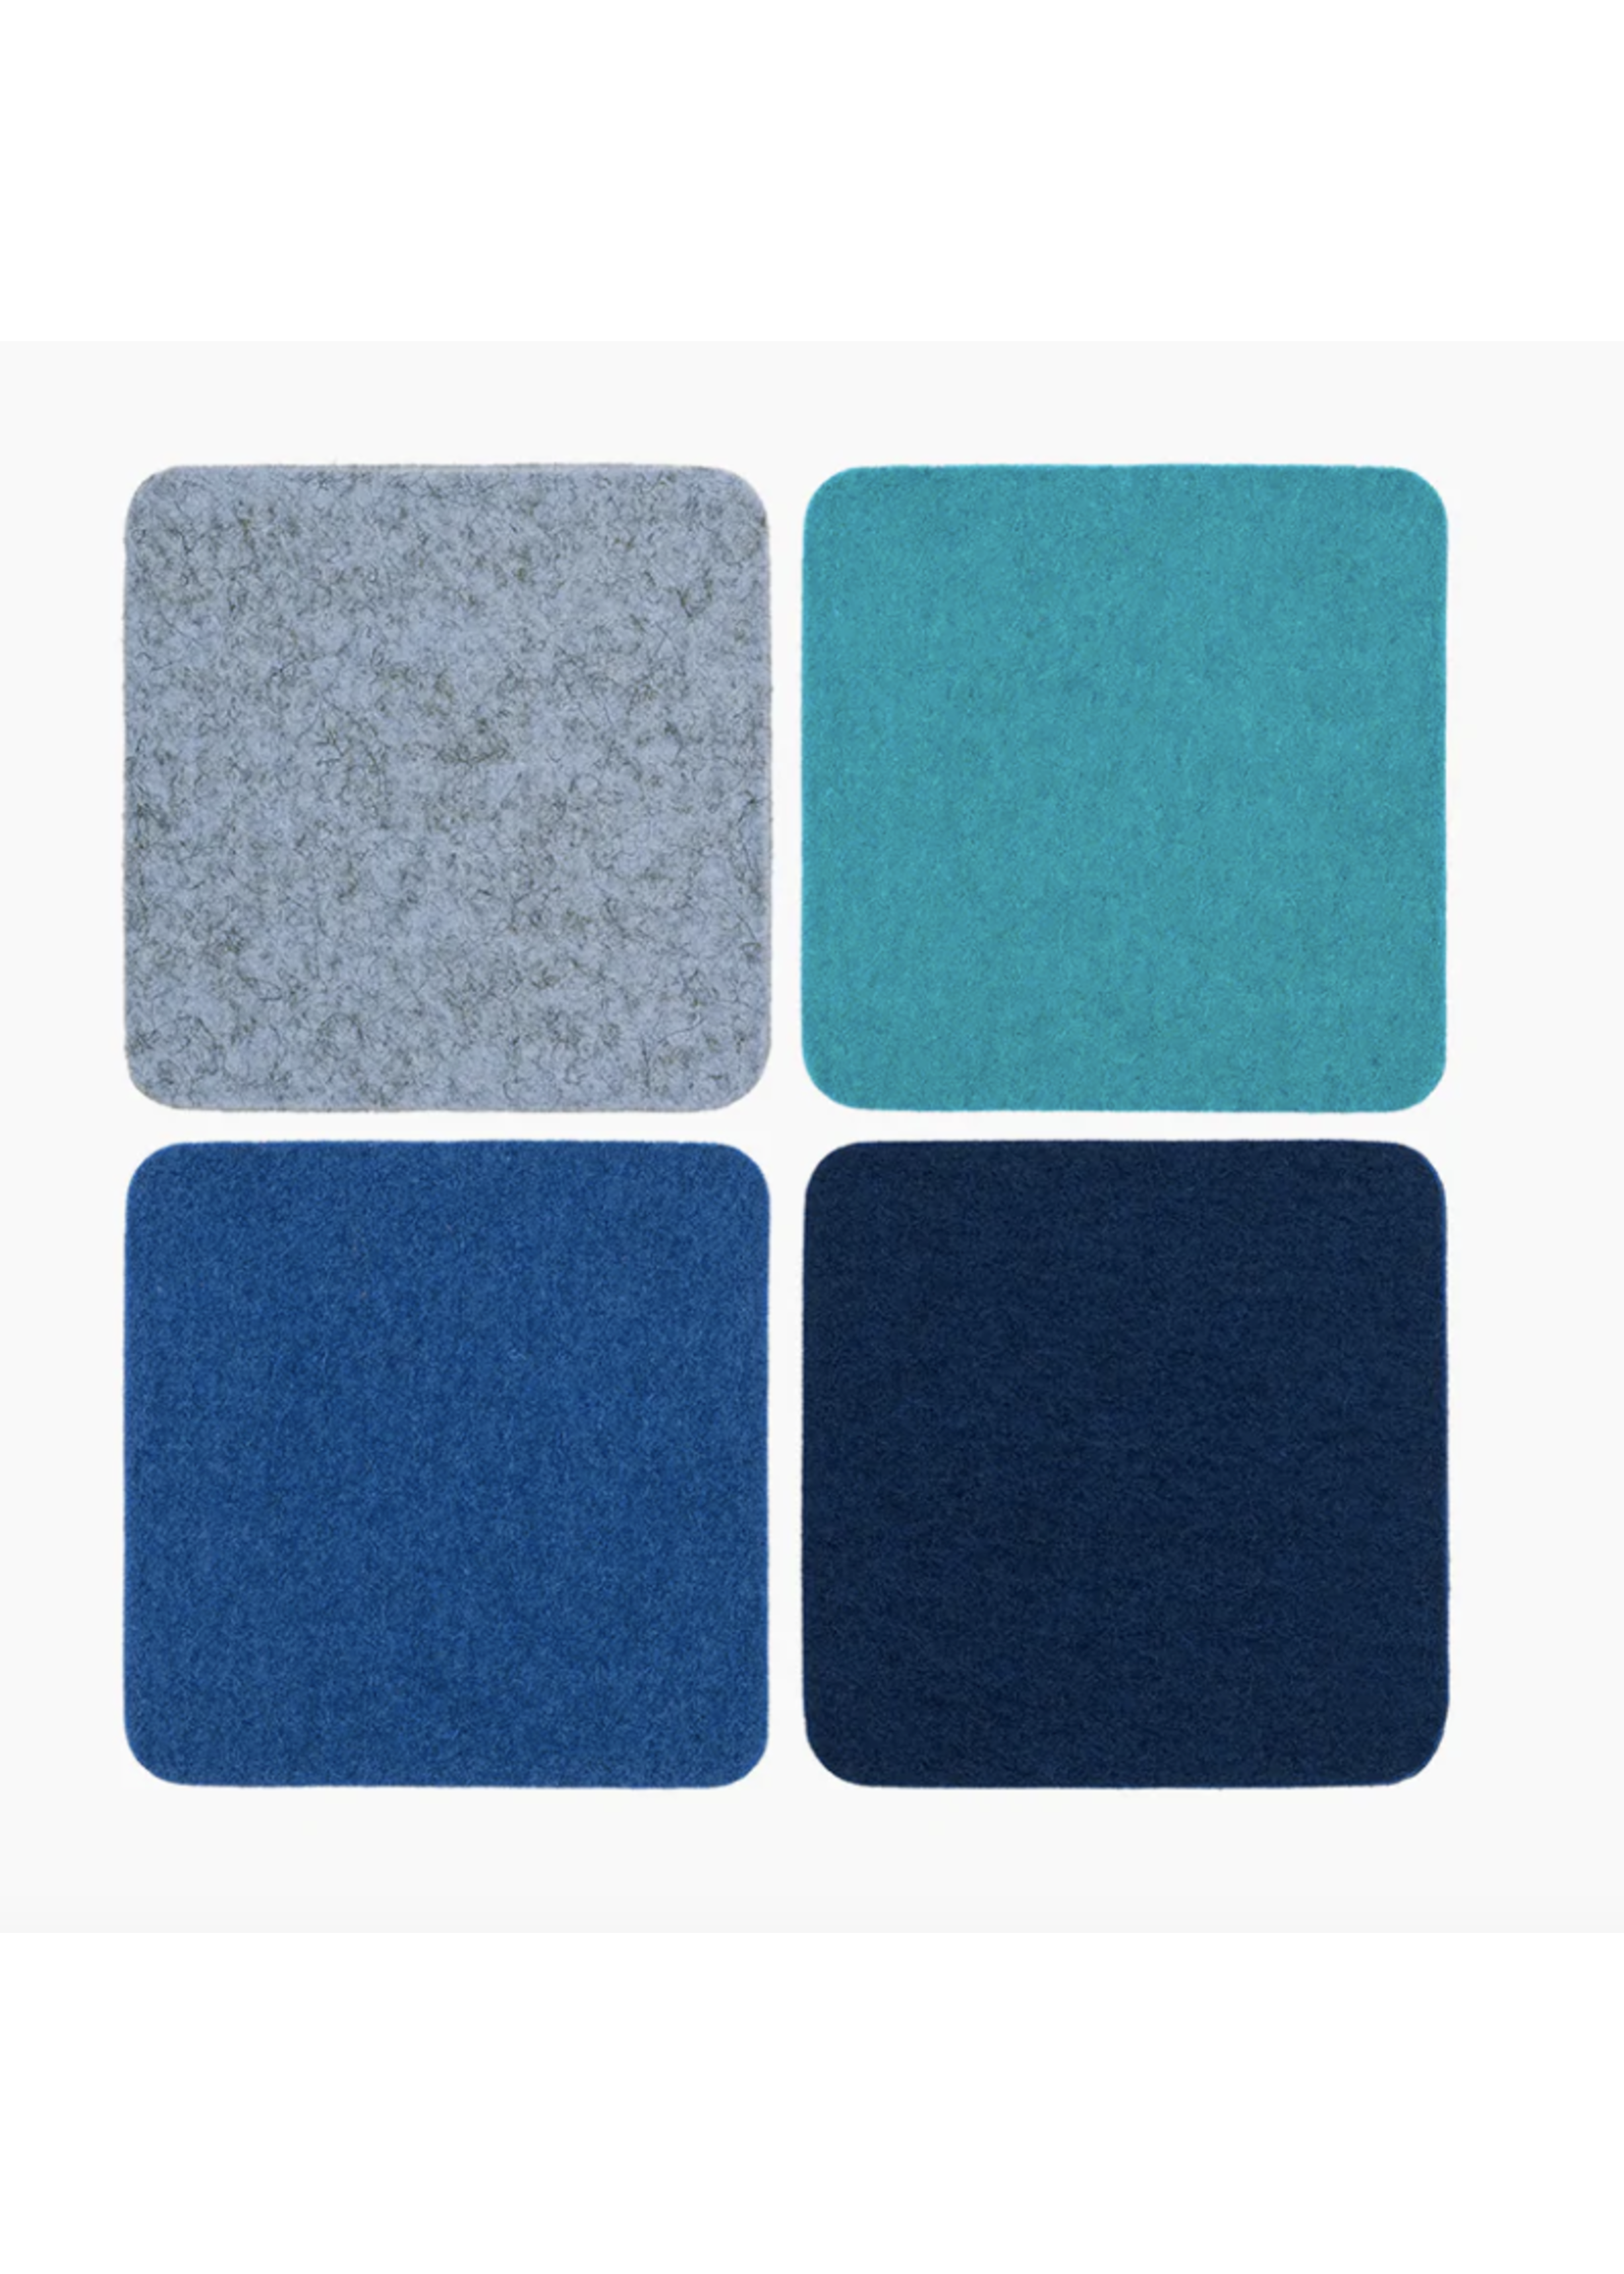 Coaster square 4 pack - Ocean - Heather Blue, Turquoise, Cobalt Blue, Marine